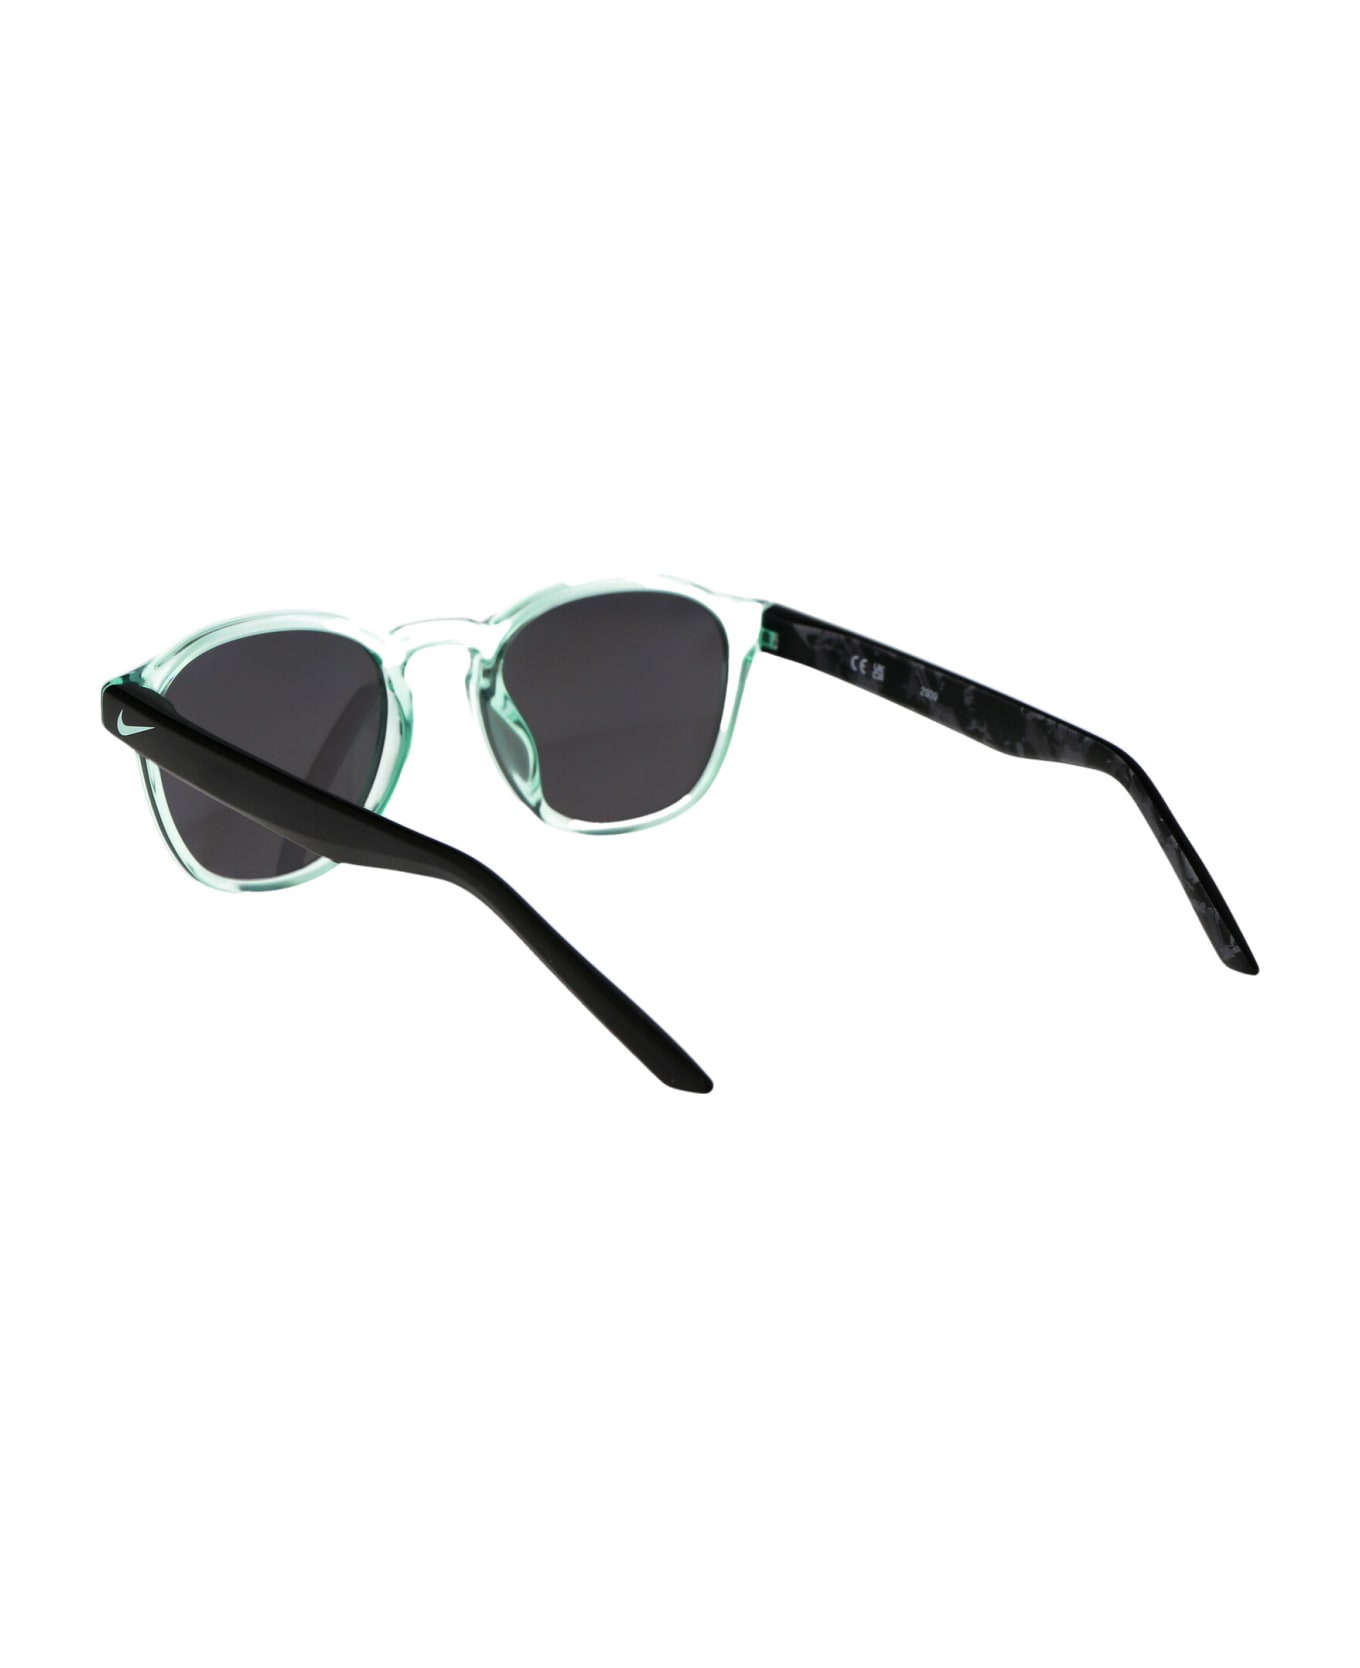 Nike Smash Sunglasses - 342 GREY W/ SILVER FLASH GREEN GLOW サングラス